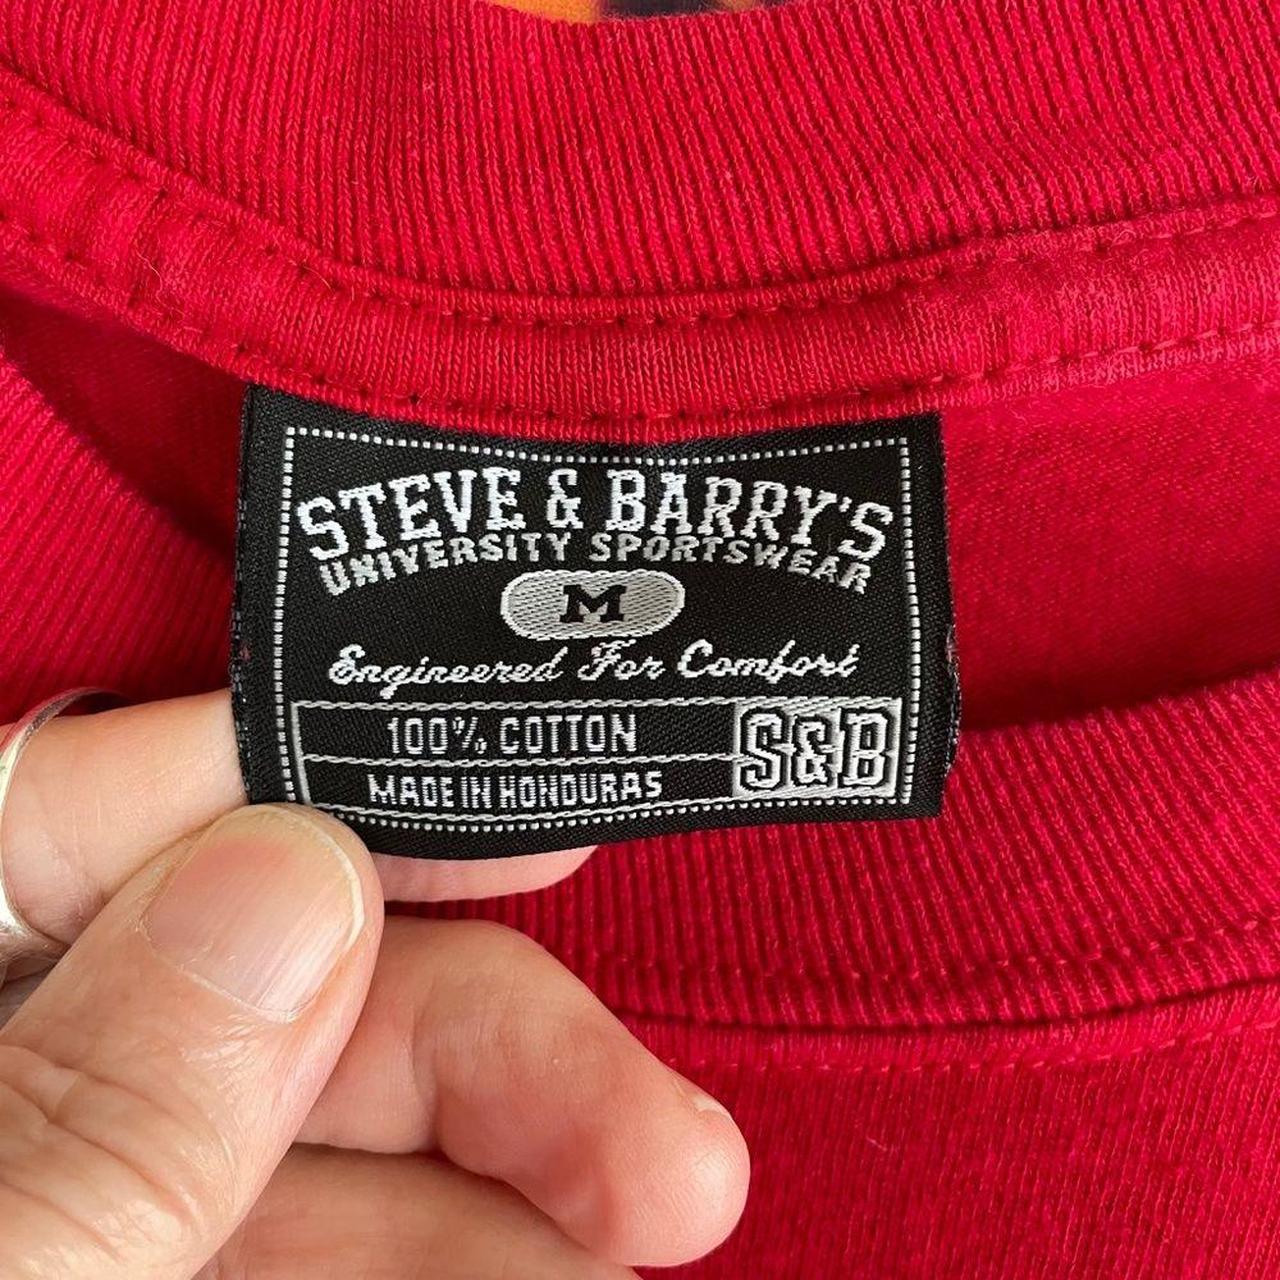 Steve & Barrys Long Sleeve Firebird Graphic Tee Size... - Depop